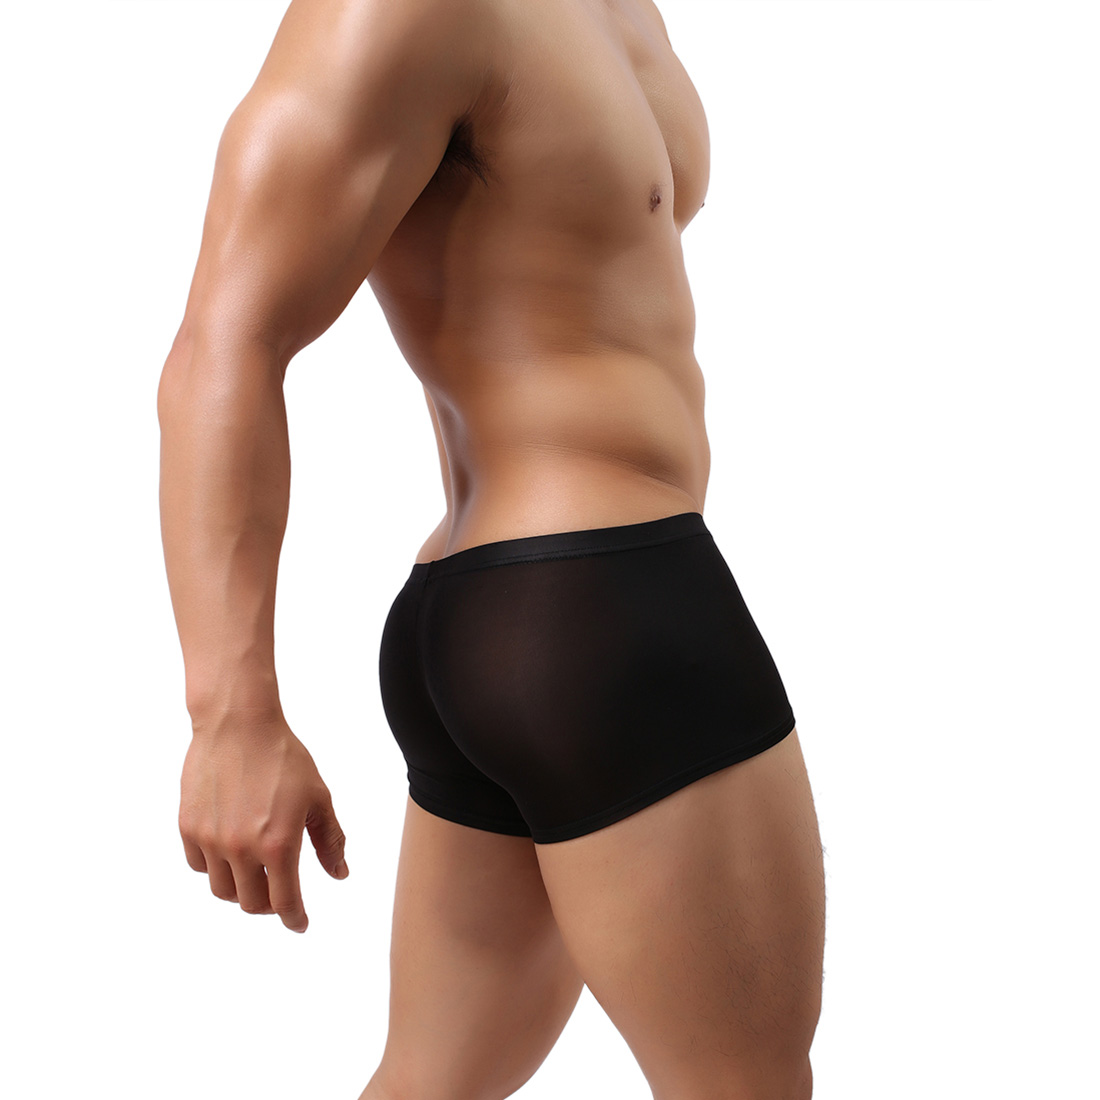 Men's Sexy Lingerie Underwear See-through Boxer Shorts Underpants WH42 Black XL